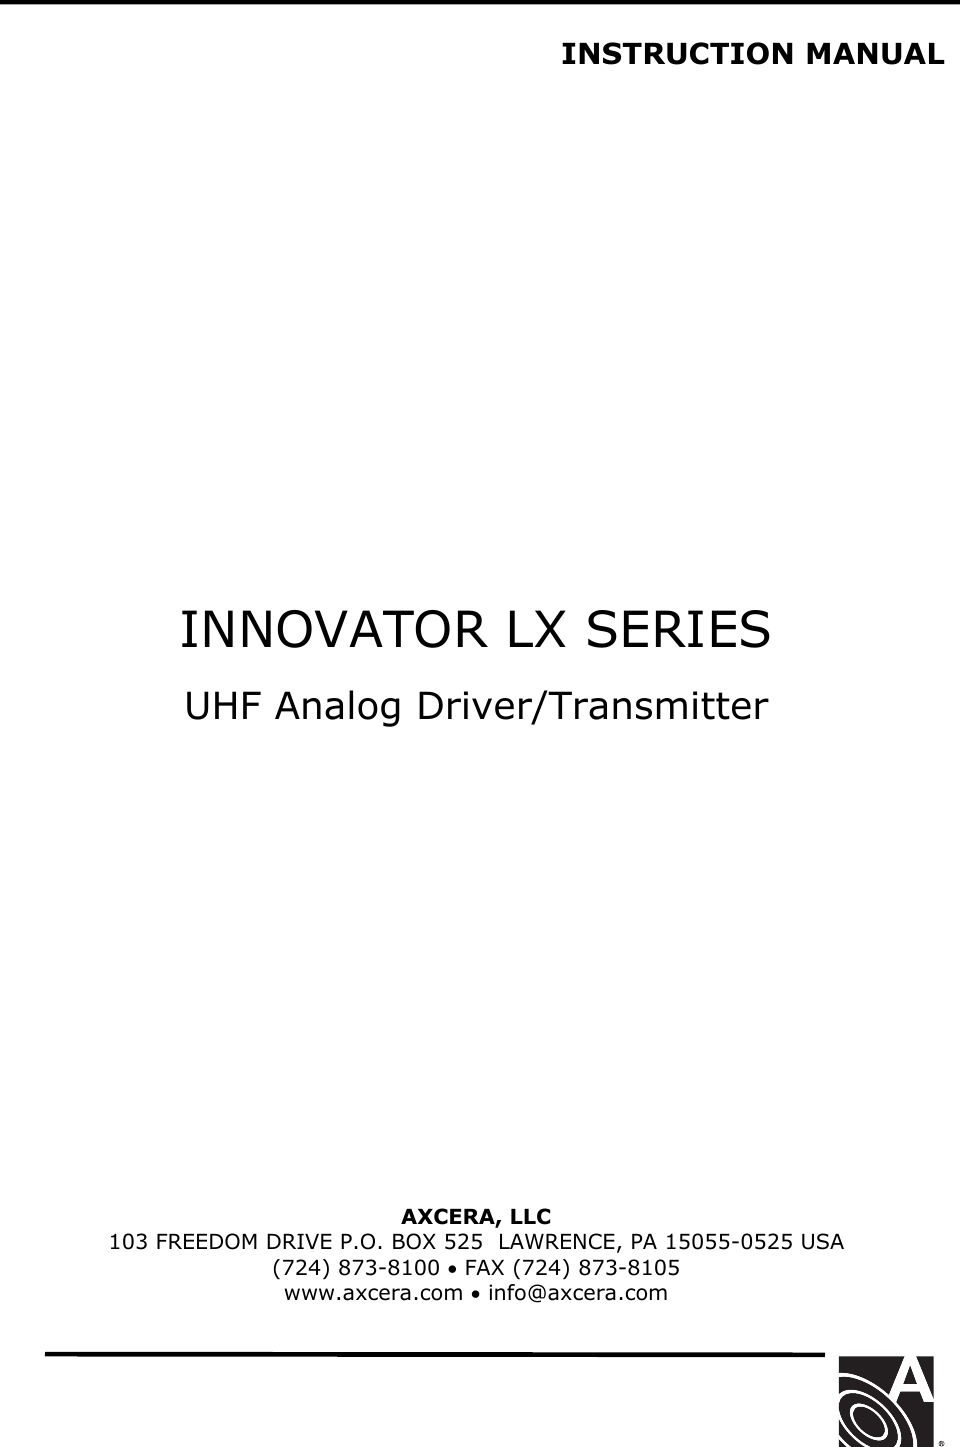   INSTRUCTION MANUAL                       INNOVATOR LX SERIES  UHF Analog Driver/Transmitter               AXCERA, LLC  103 FREEDOM DRIVE P.O. BOX 525  LAWRENCE, PA 15055-0525 USA (724) 873-8100 • FAX (724) 873-8105 www.axcera.com • info@axcera.com     